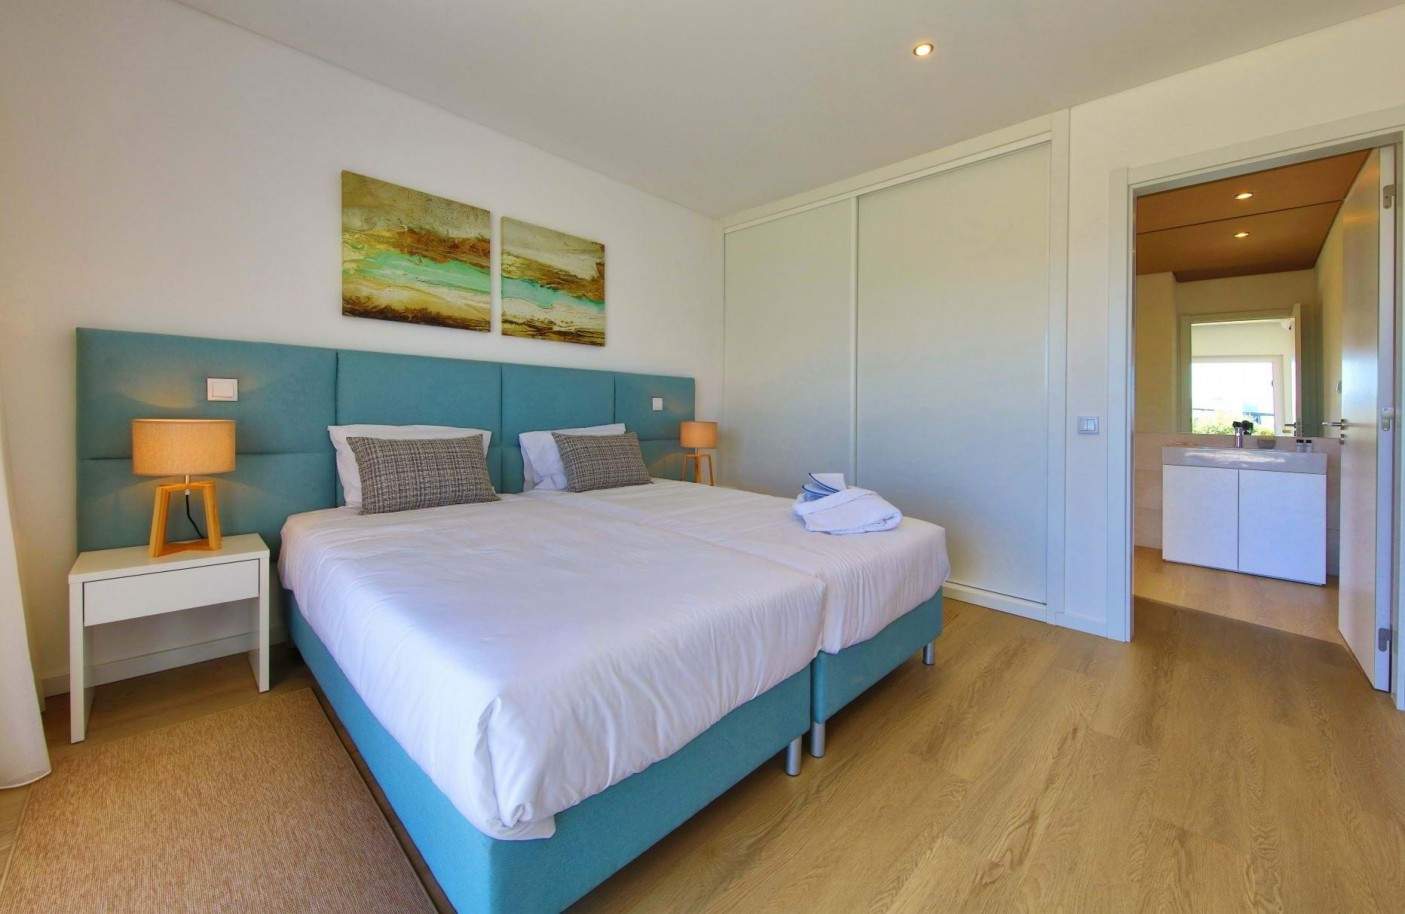 2+1 Bedroom Villa in resort, for sale in Carvoeiro, Algarve, Portugal_204793